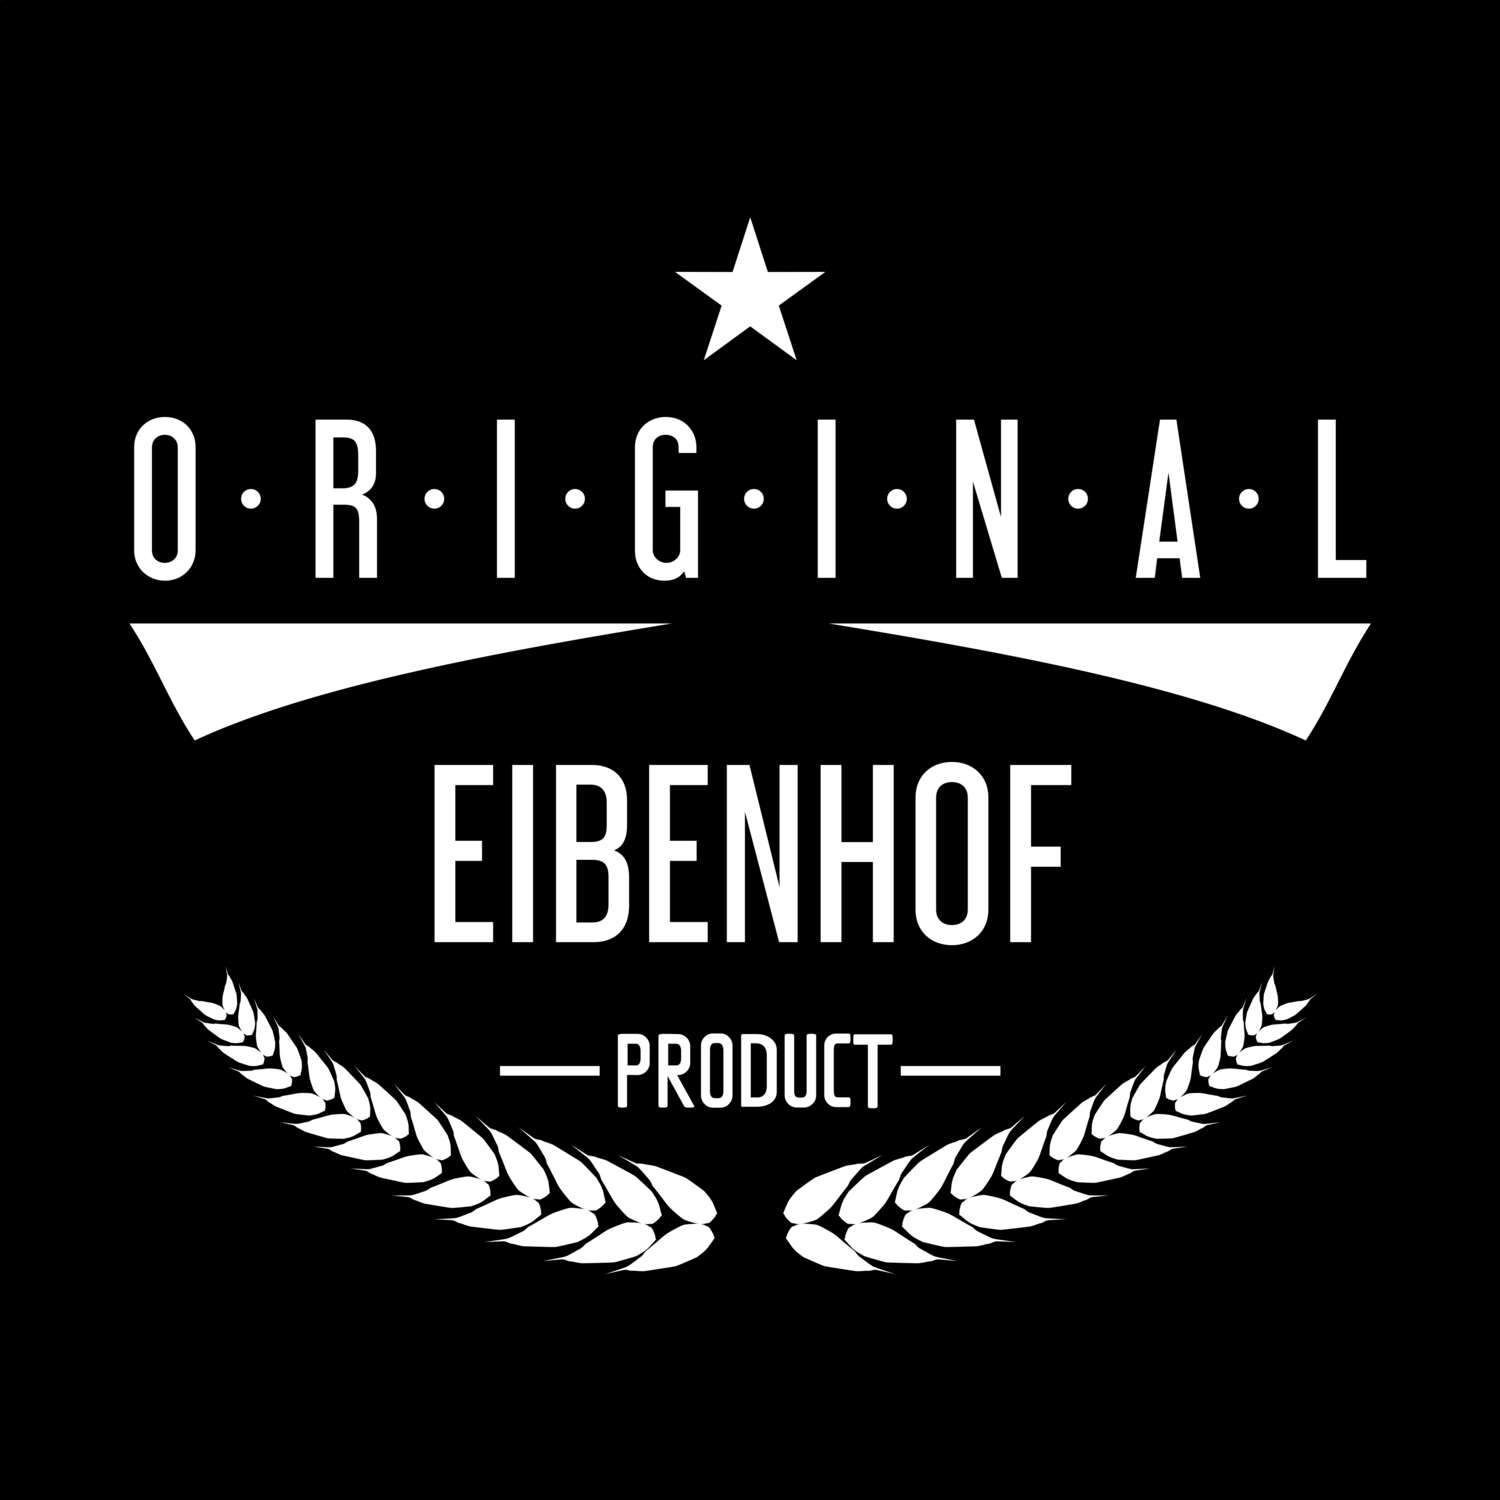 Eibenhof T-Shirt »Original Product«